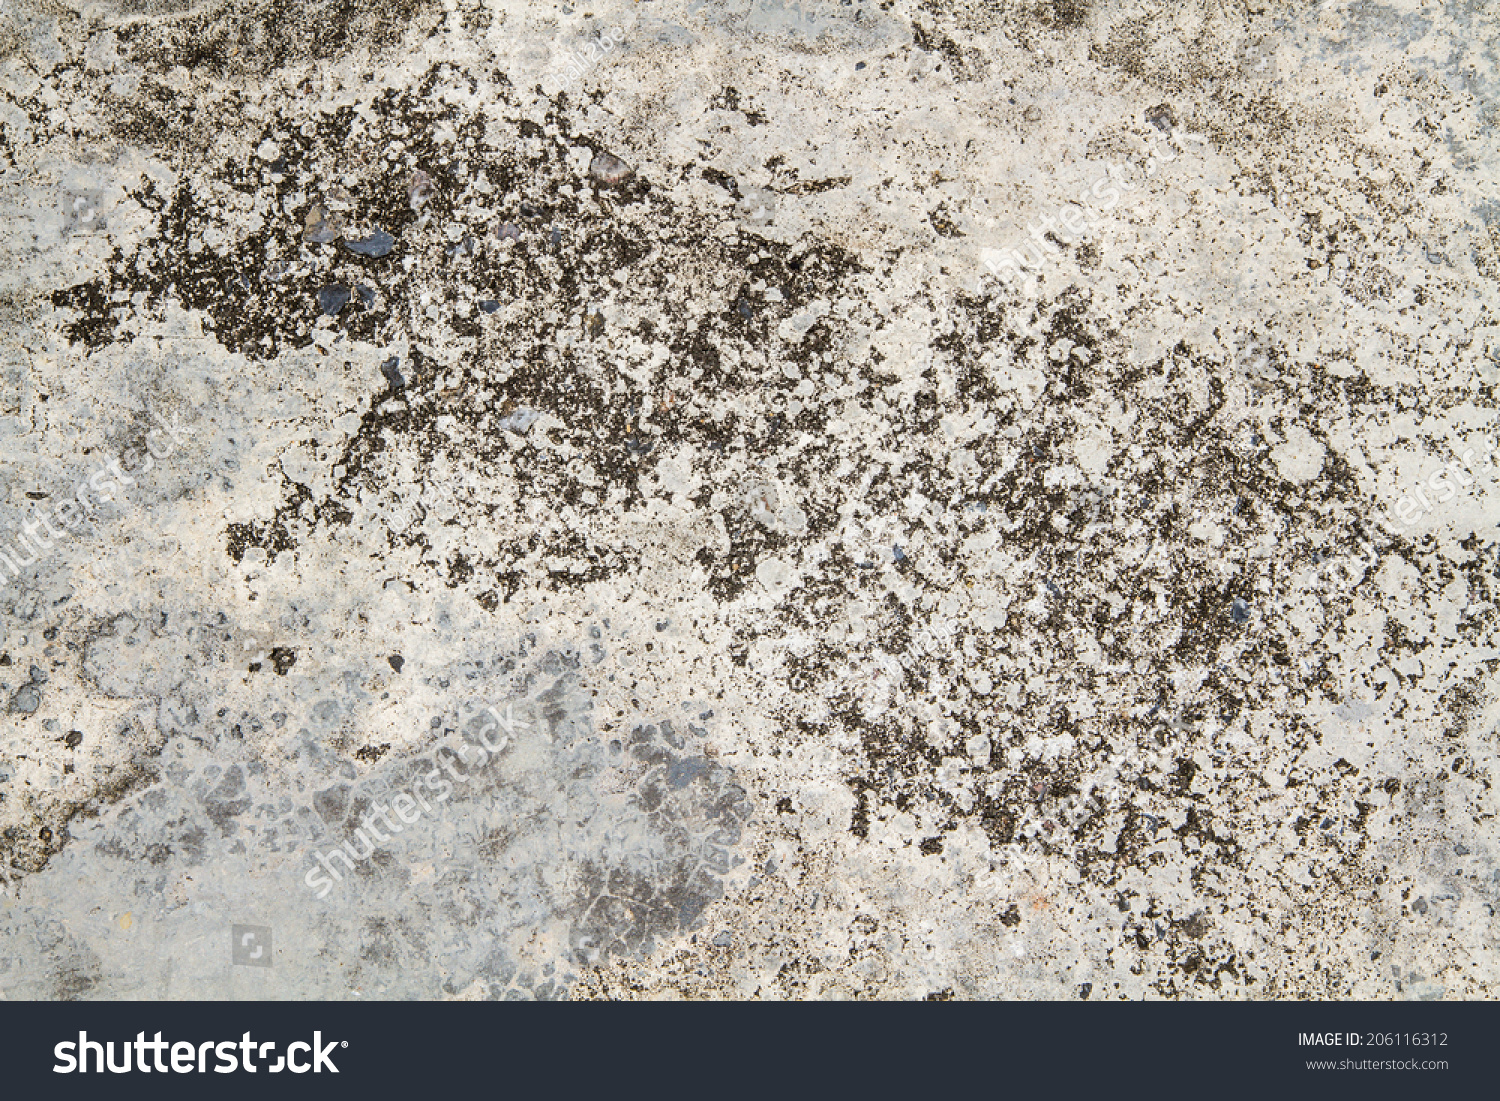 Peeling Paint On Cement Wall Texture Stock Photo 206116312 - Shutterstock